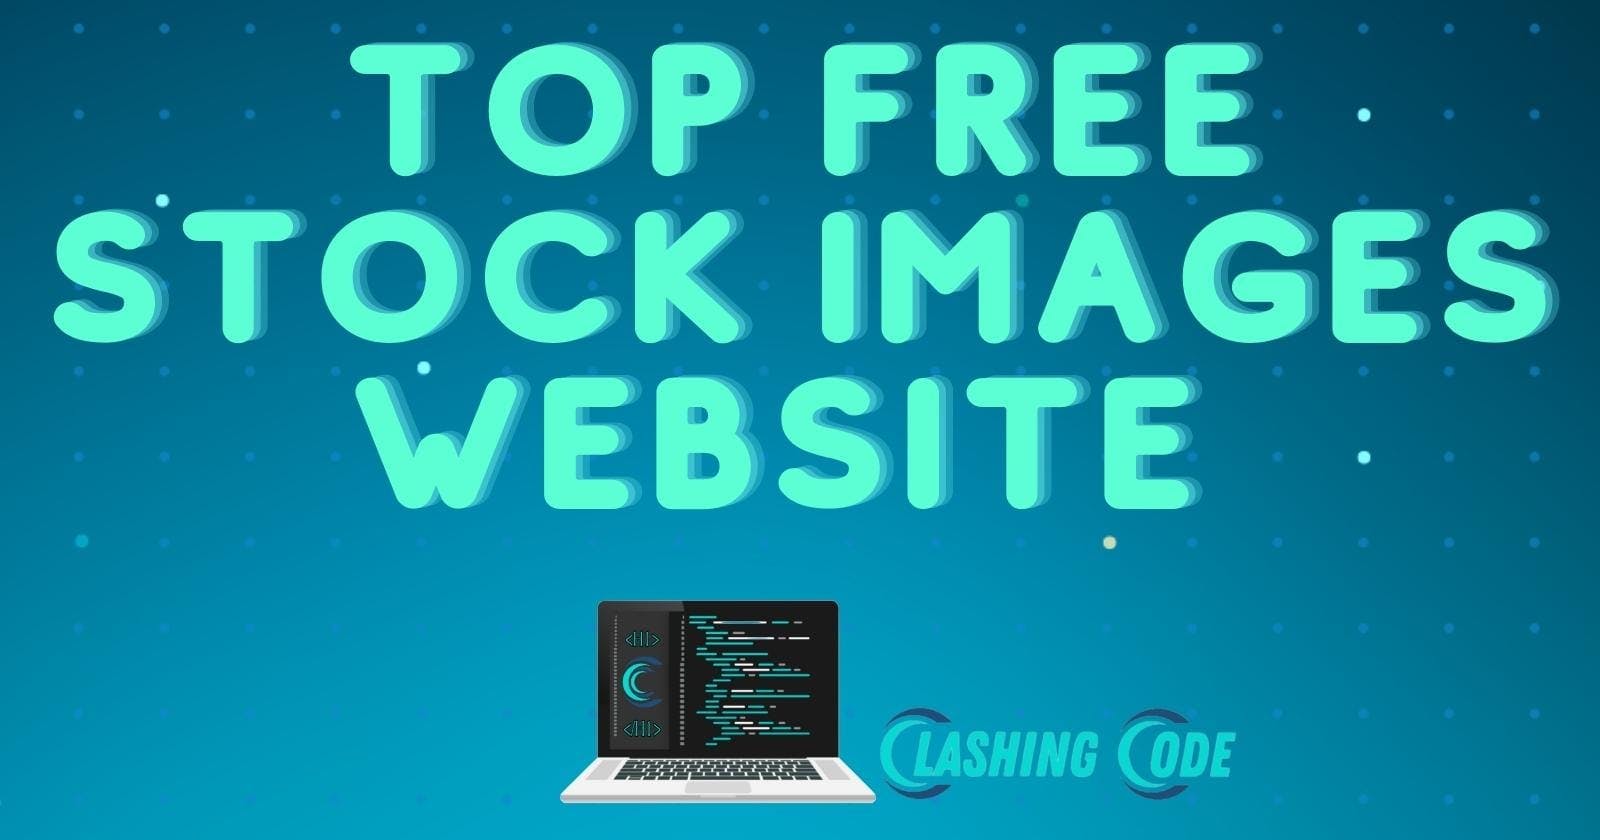 Top Free Stock Images Website For Web Developer 🙂